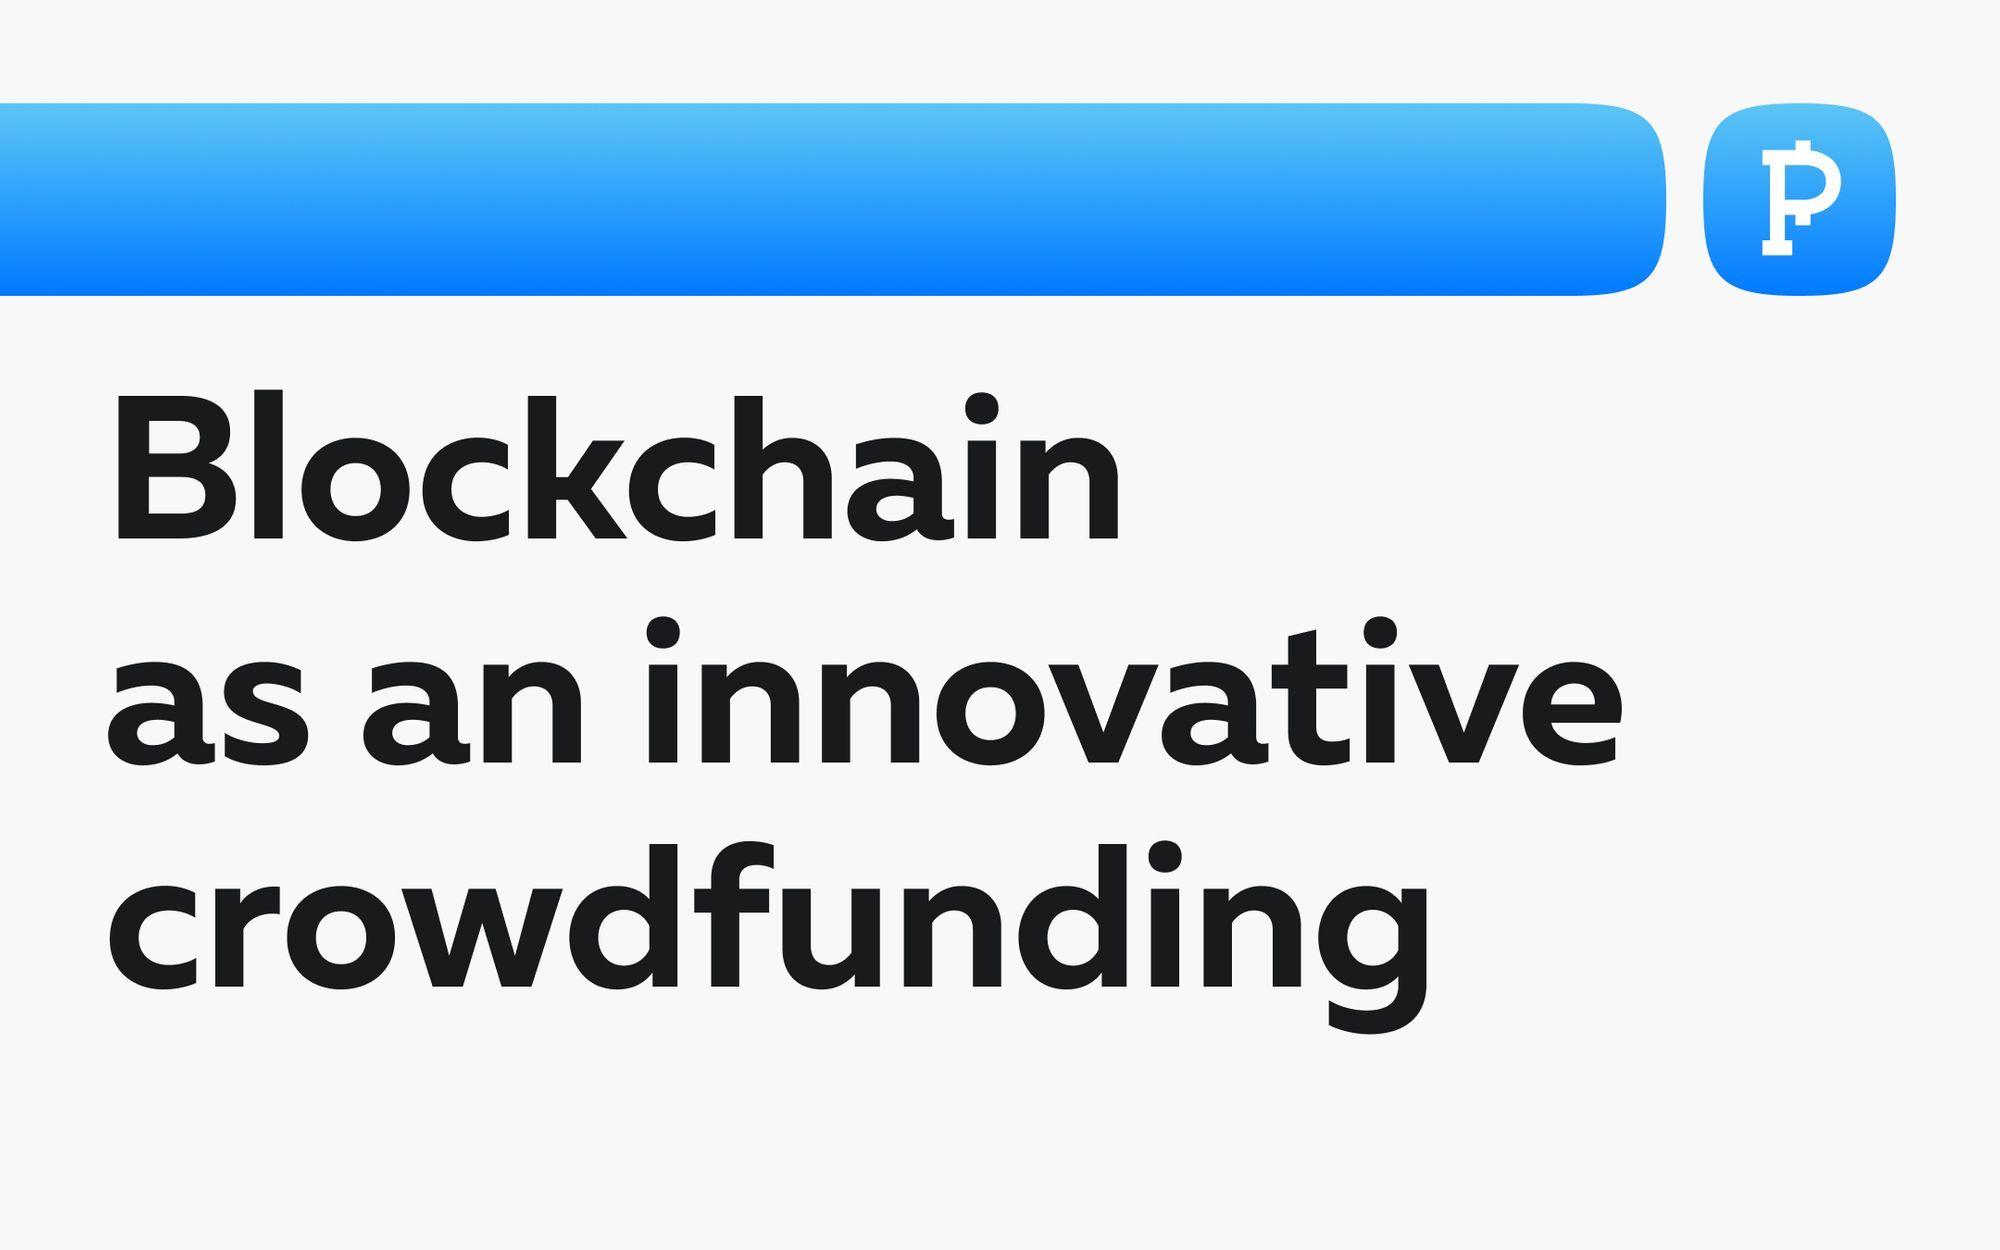 Innovative crowdfunding models based on blockchain technology